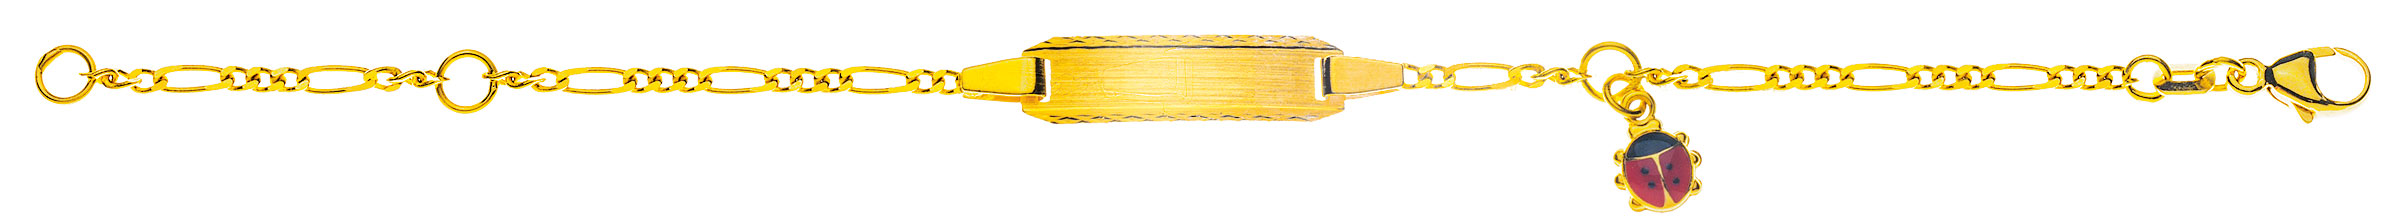 AURONOS Prestige ID-Bracelet en or jaune 18k Chaîne Figaro diamantée 14cm